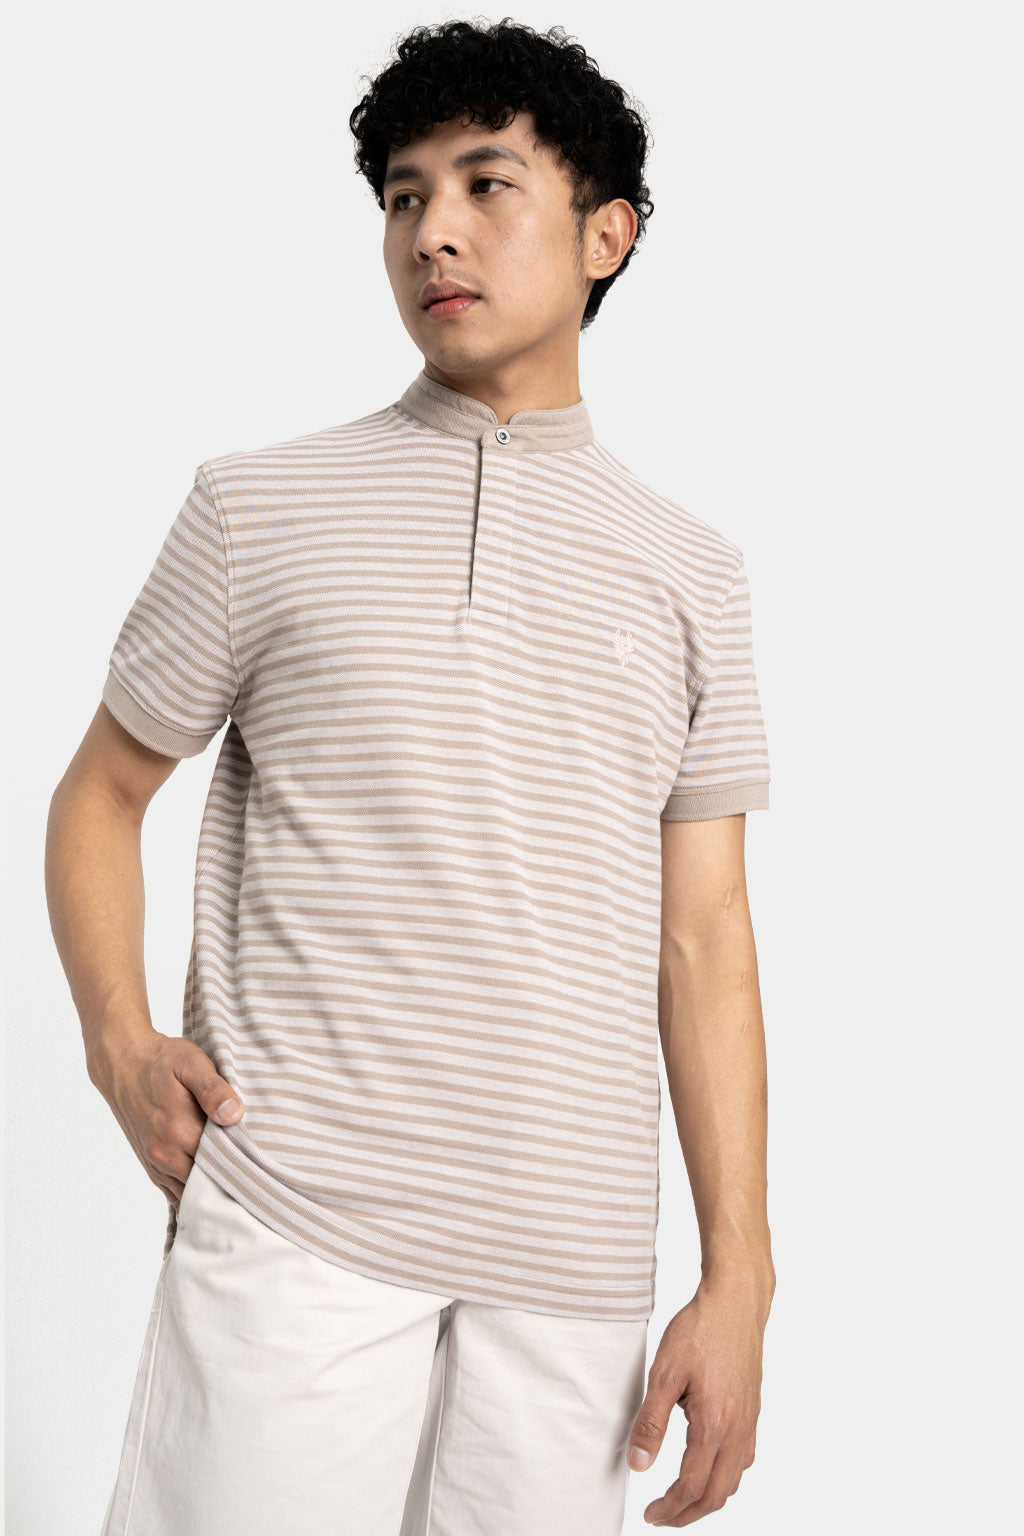 Bianco & Nero - Men's Cotton T-Shirt